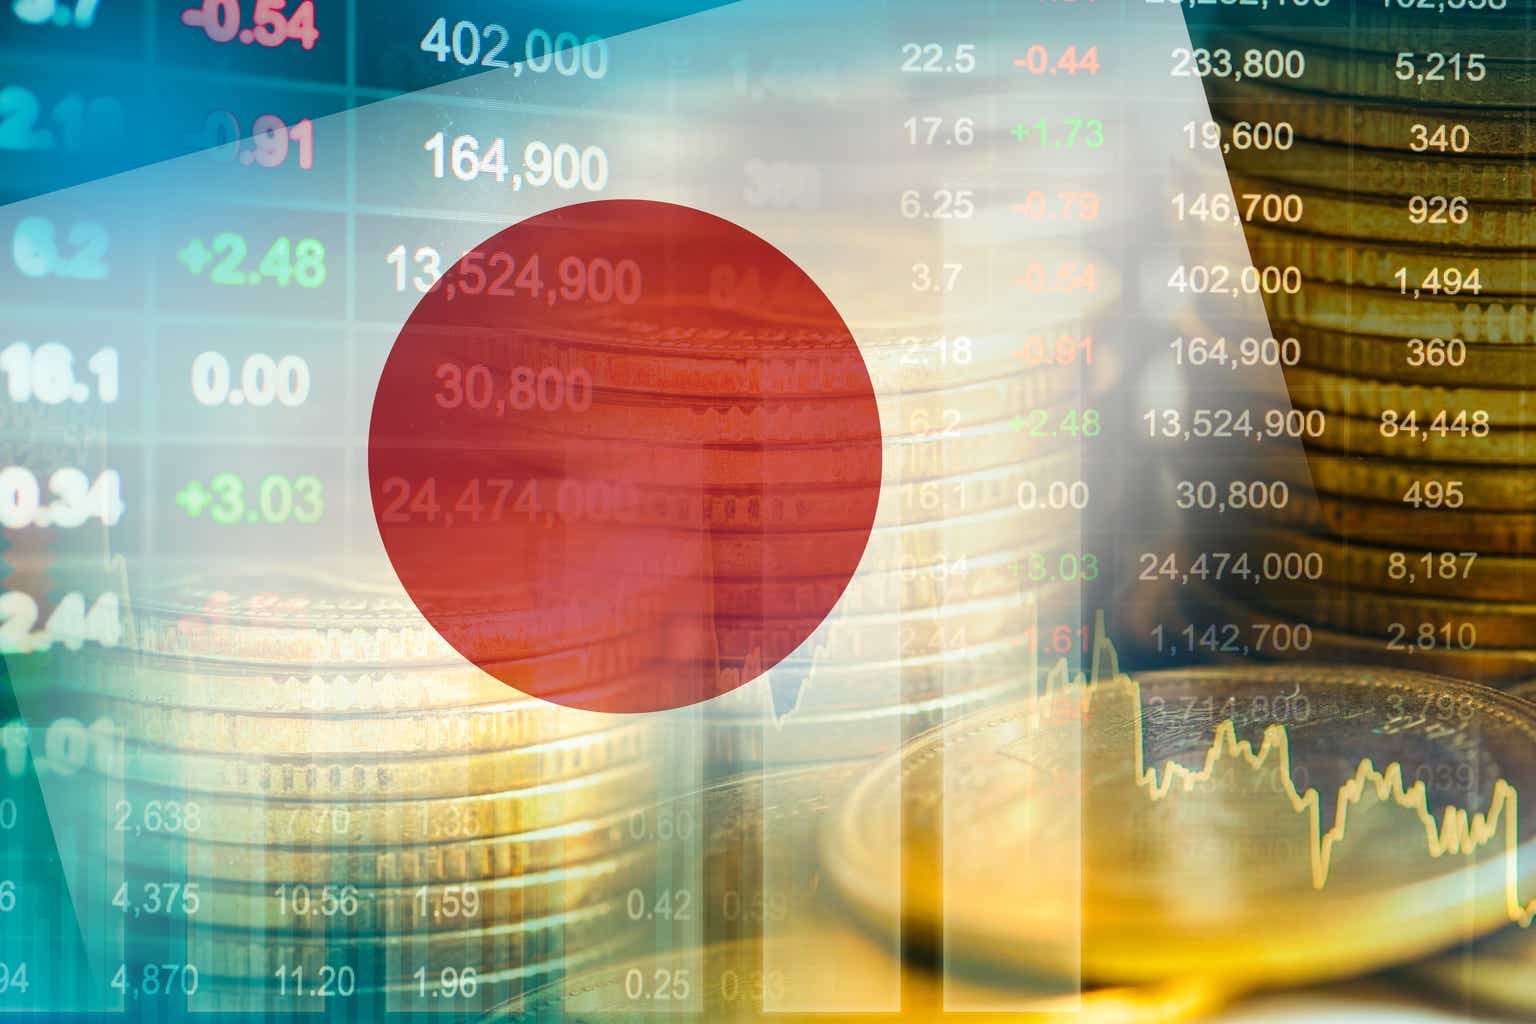 revitalized-japanese-stock-market-fuels-investor-optimism